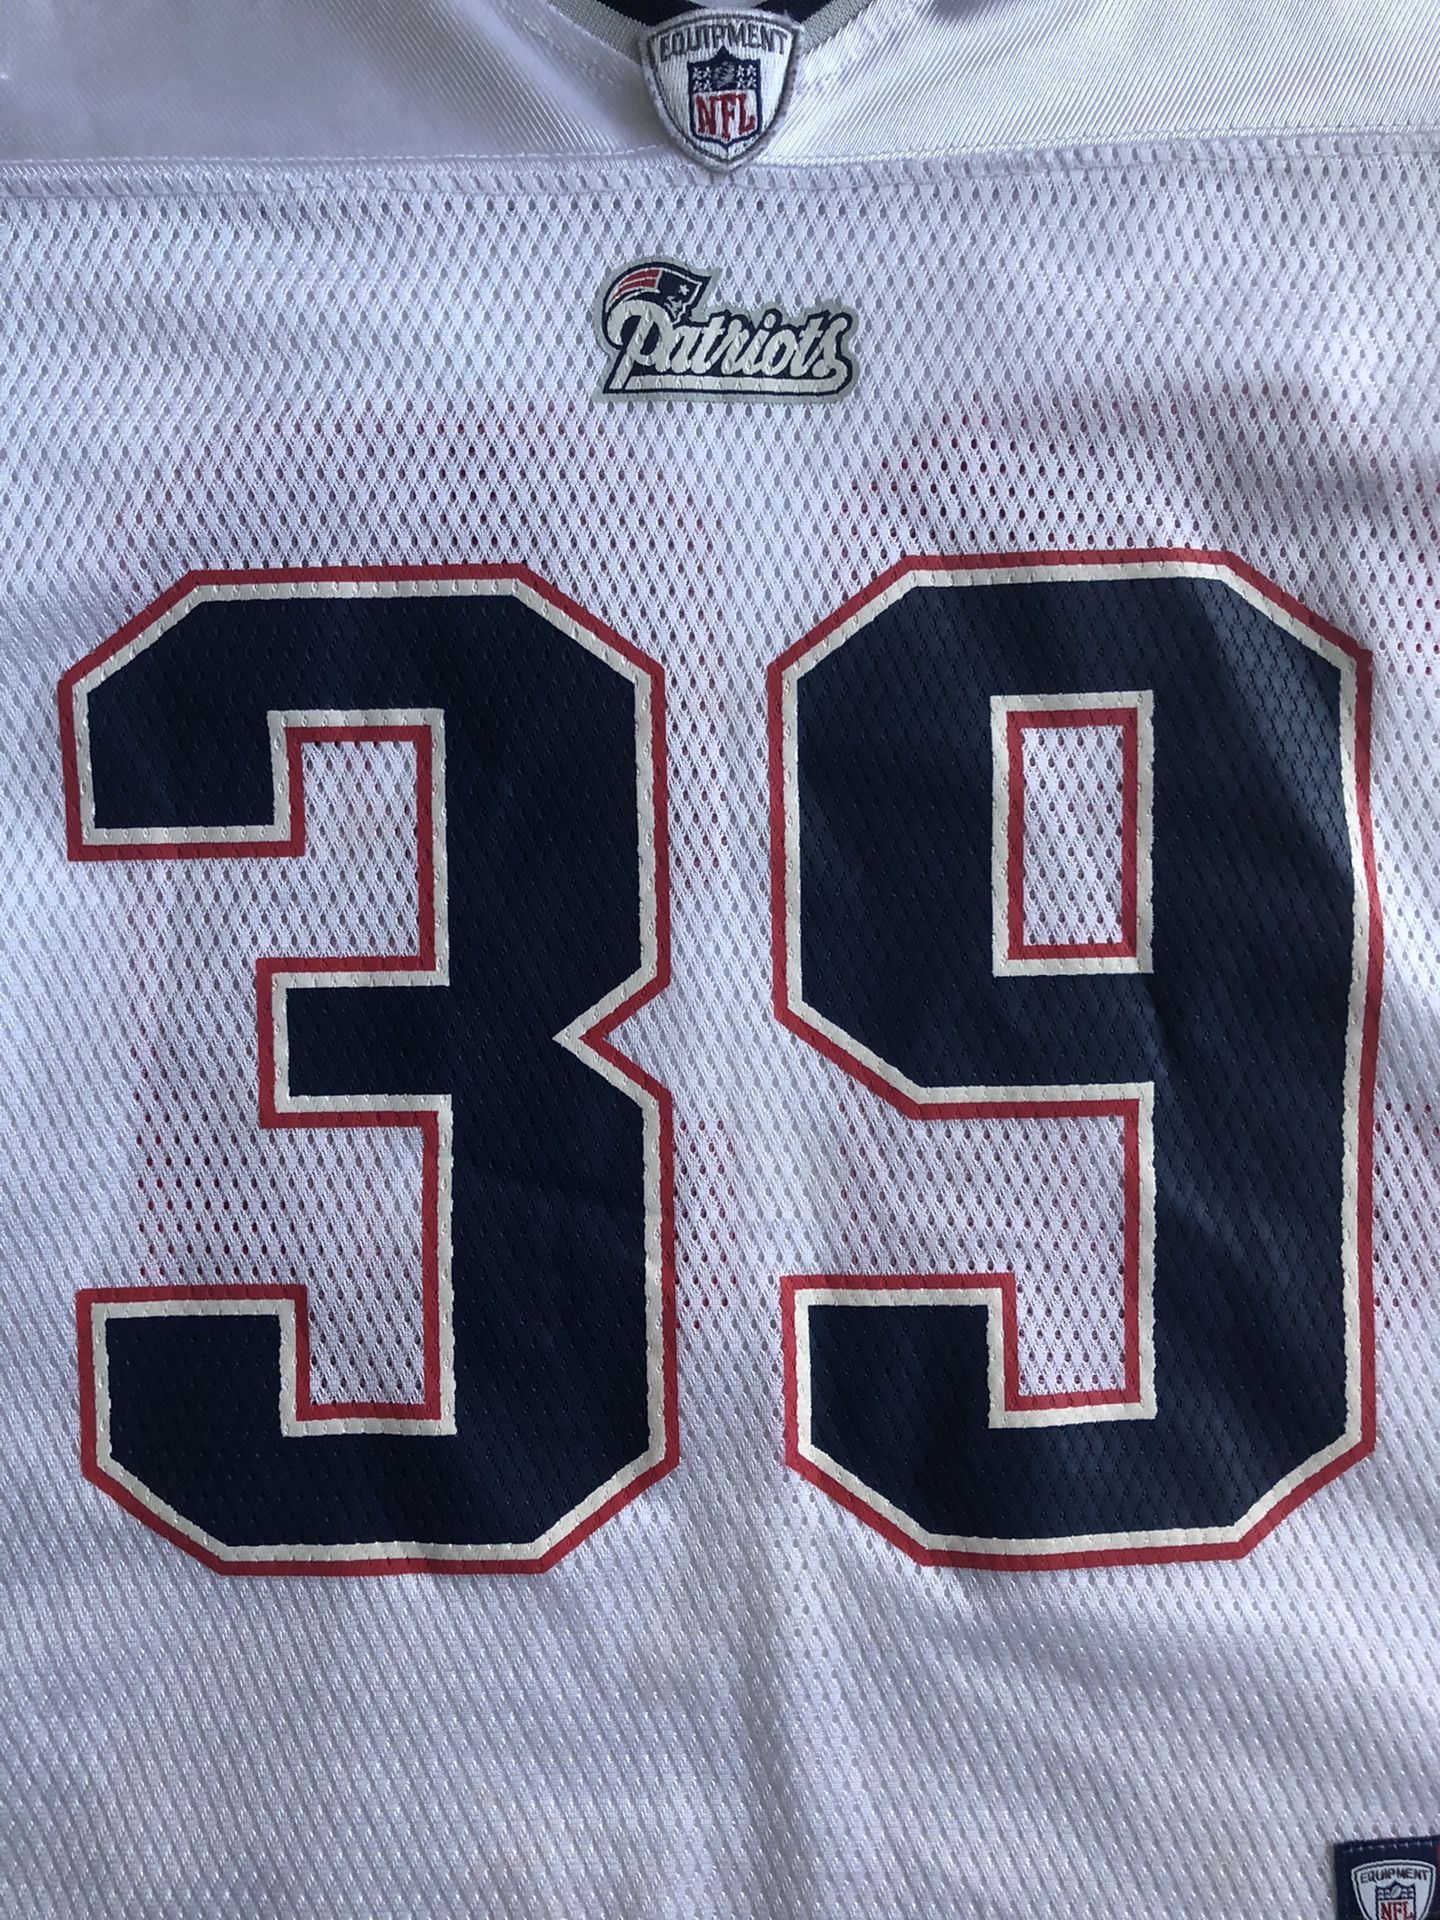 Patriots jersey #39